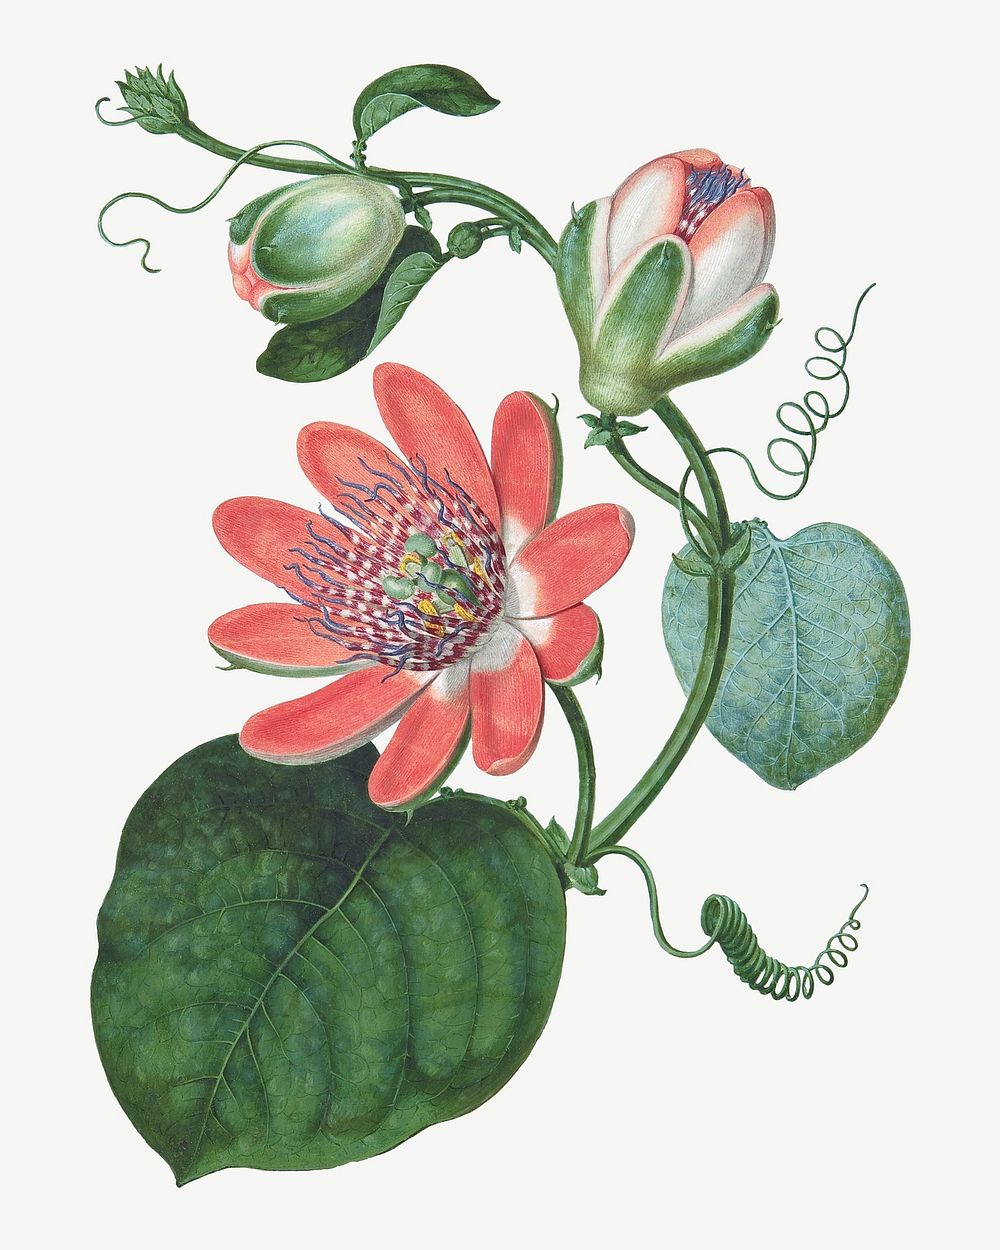 Passion flower, vintage botanical illustration by Sydenham Teak Edwards psd. Remixed by rawpixel.